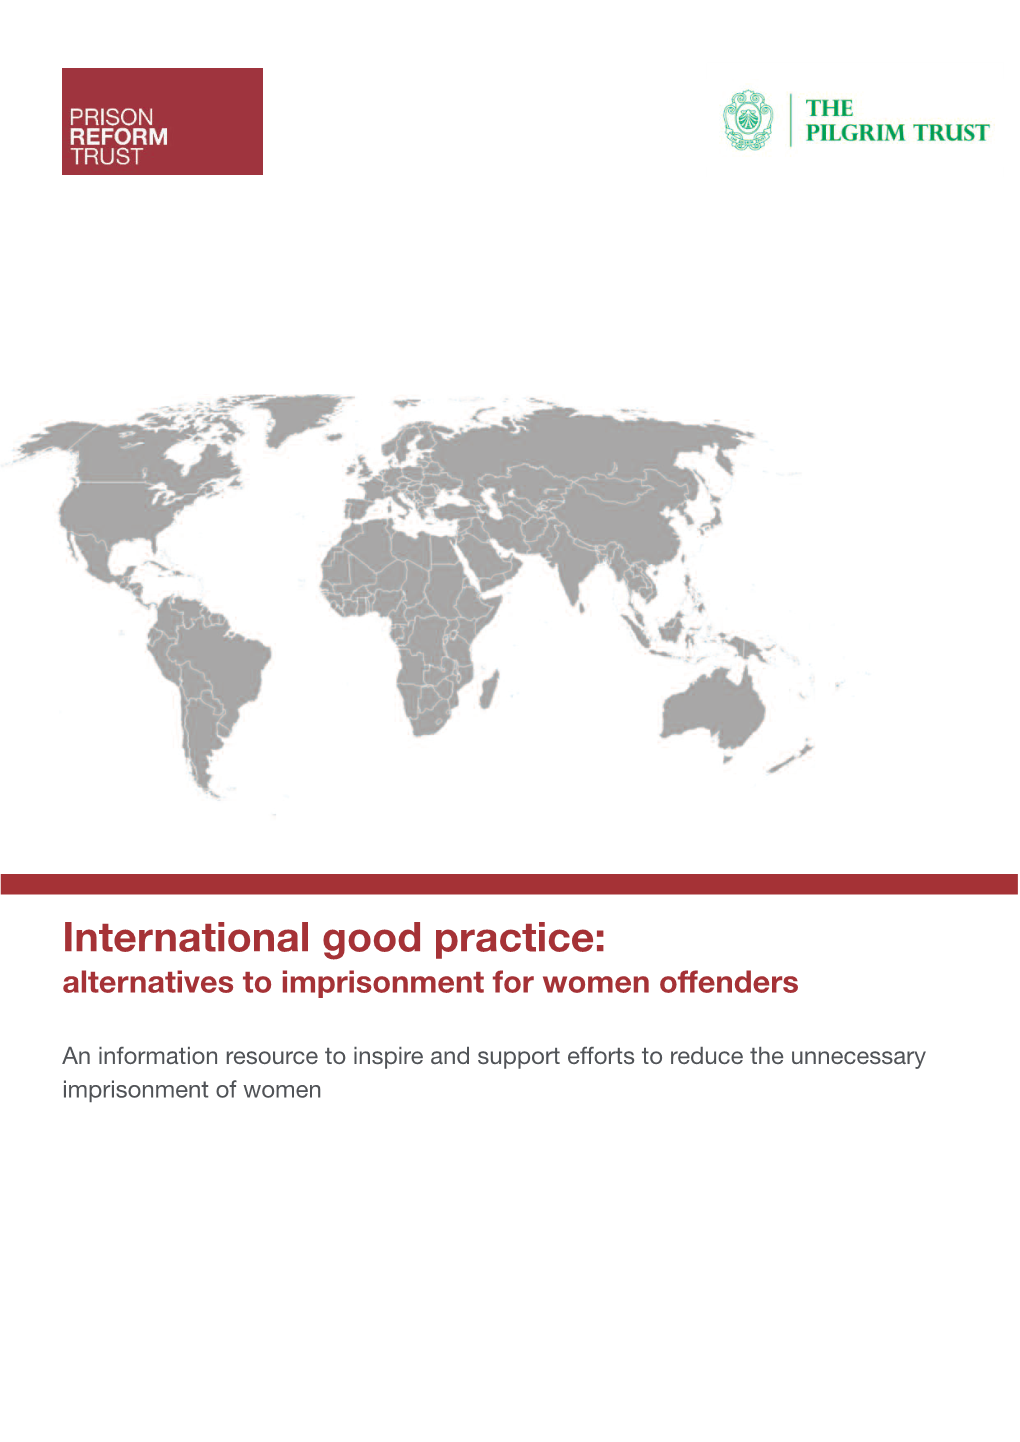 International Good Practice: Alternatives to Imprisonment for Women Offenders